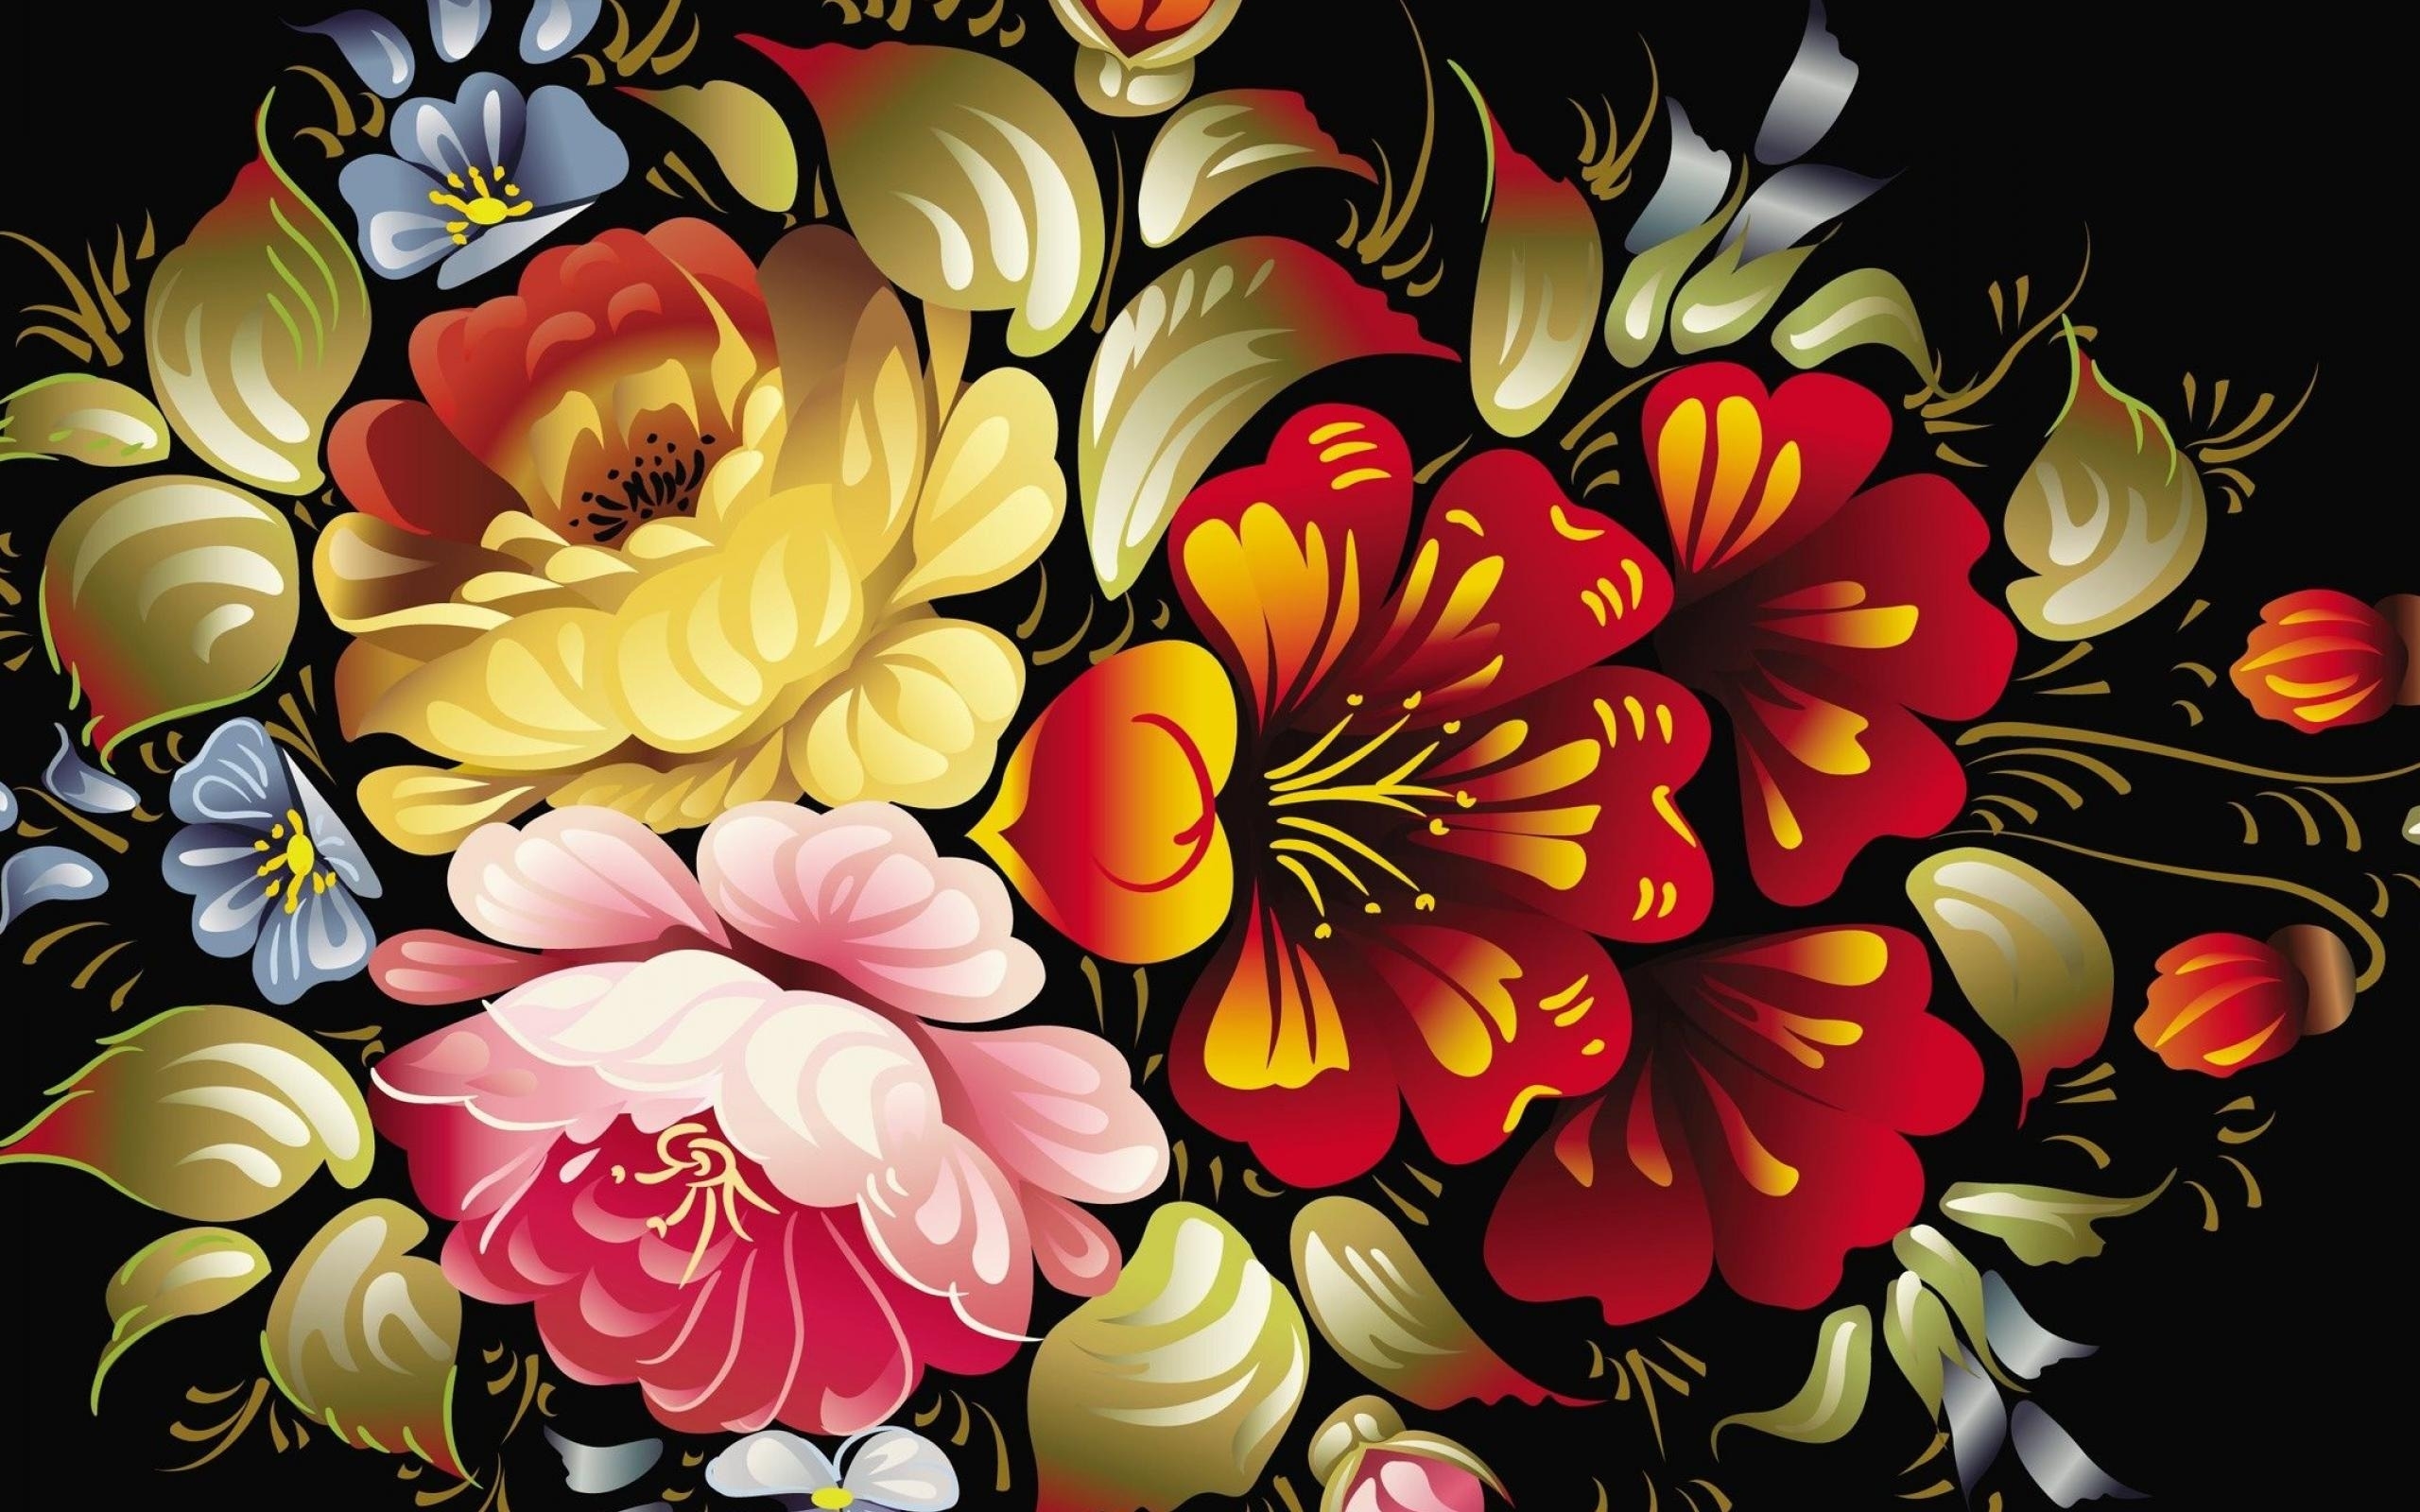 Cool abstract flower wallpaper HD 